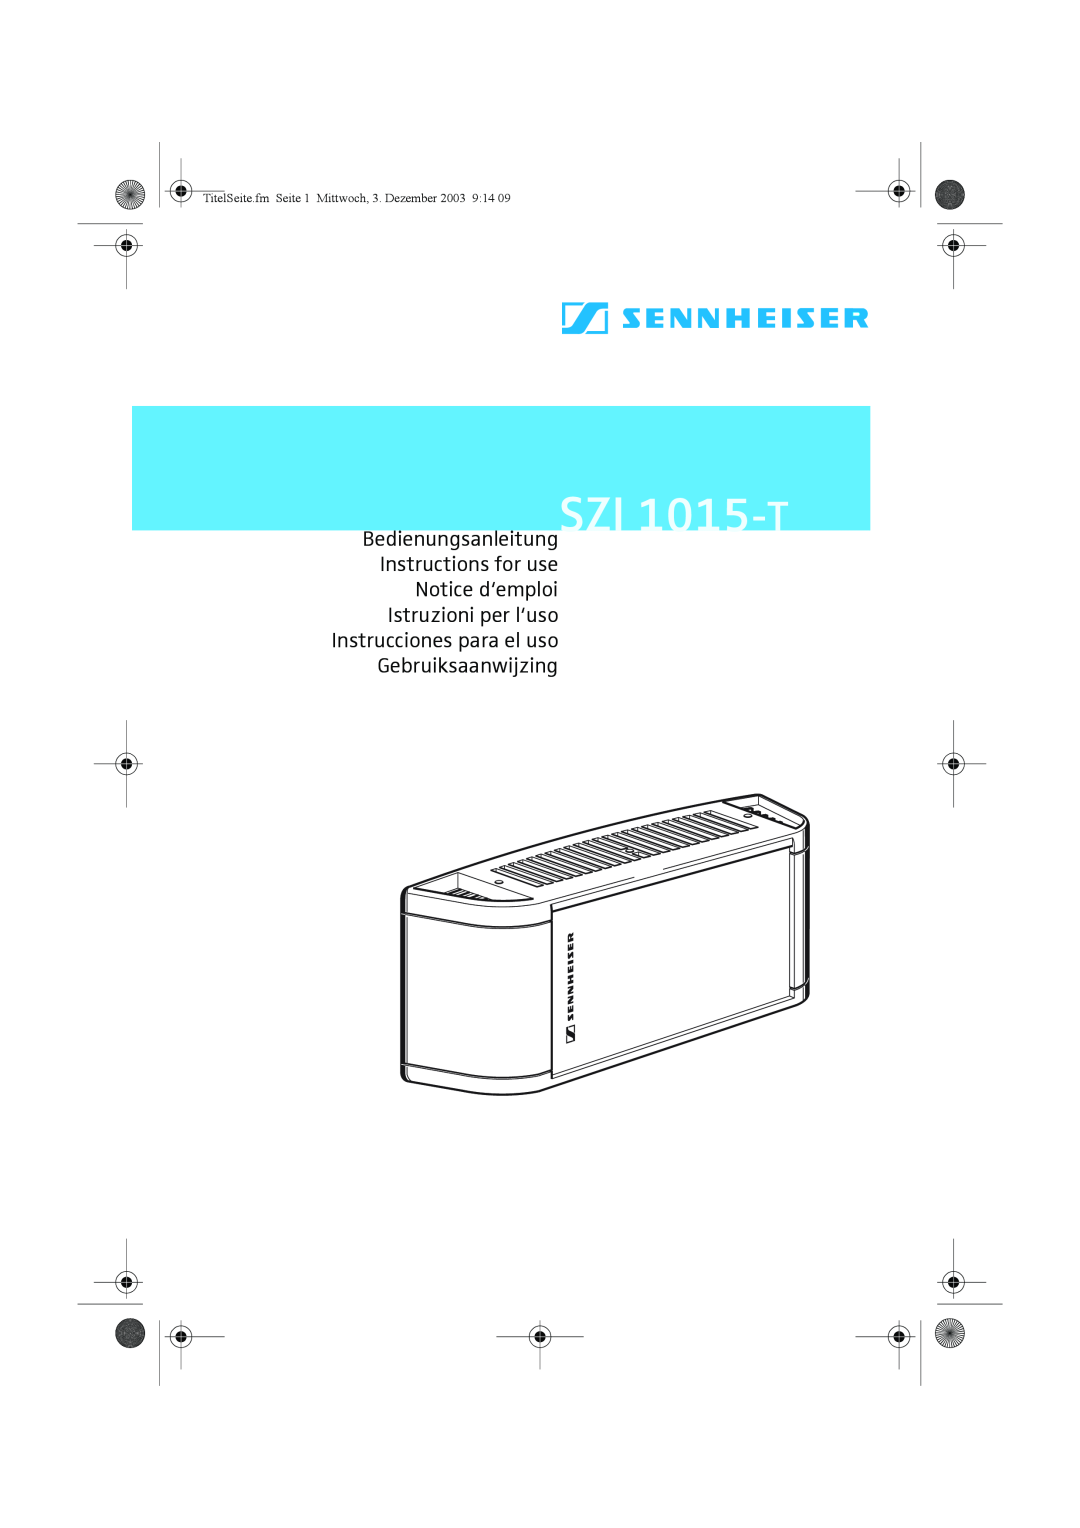 Sennheiser SZI 1015-T manual 